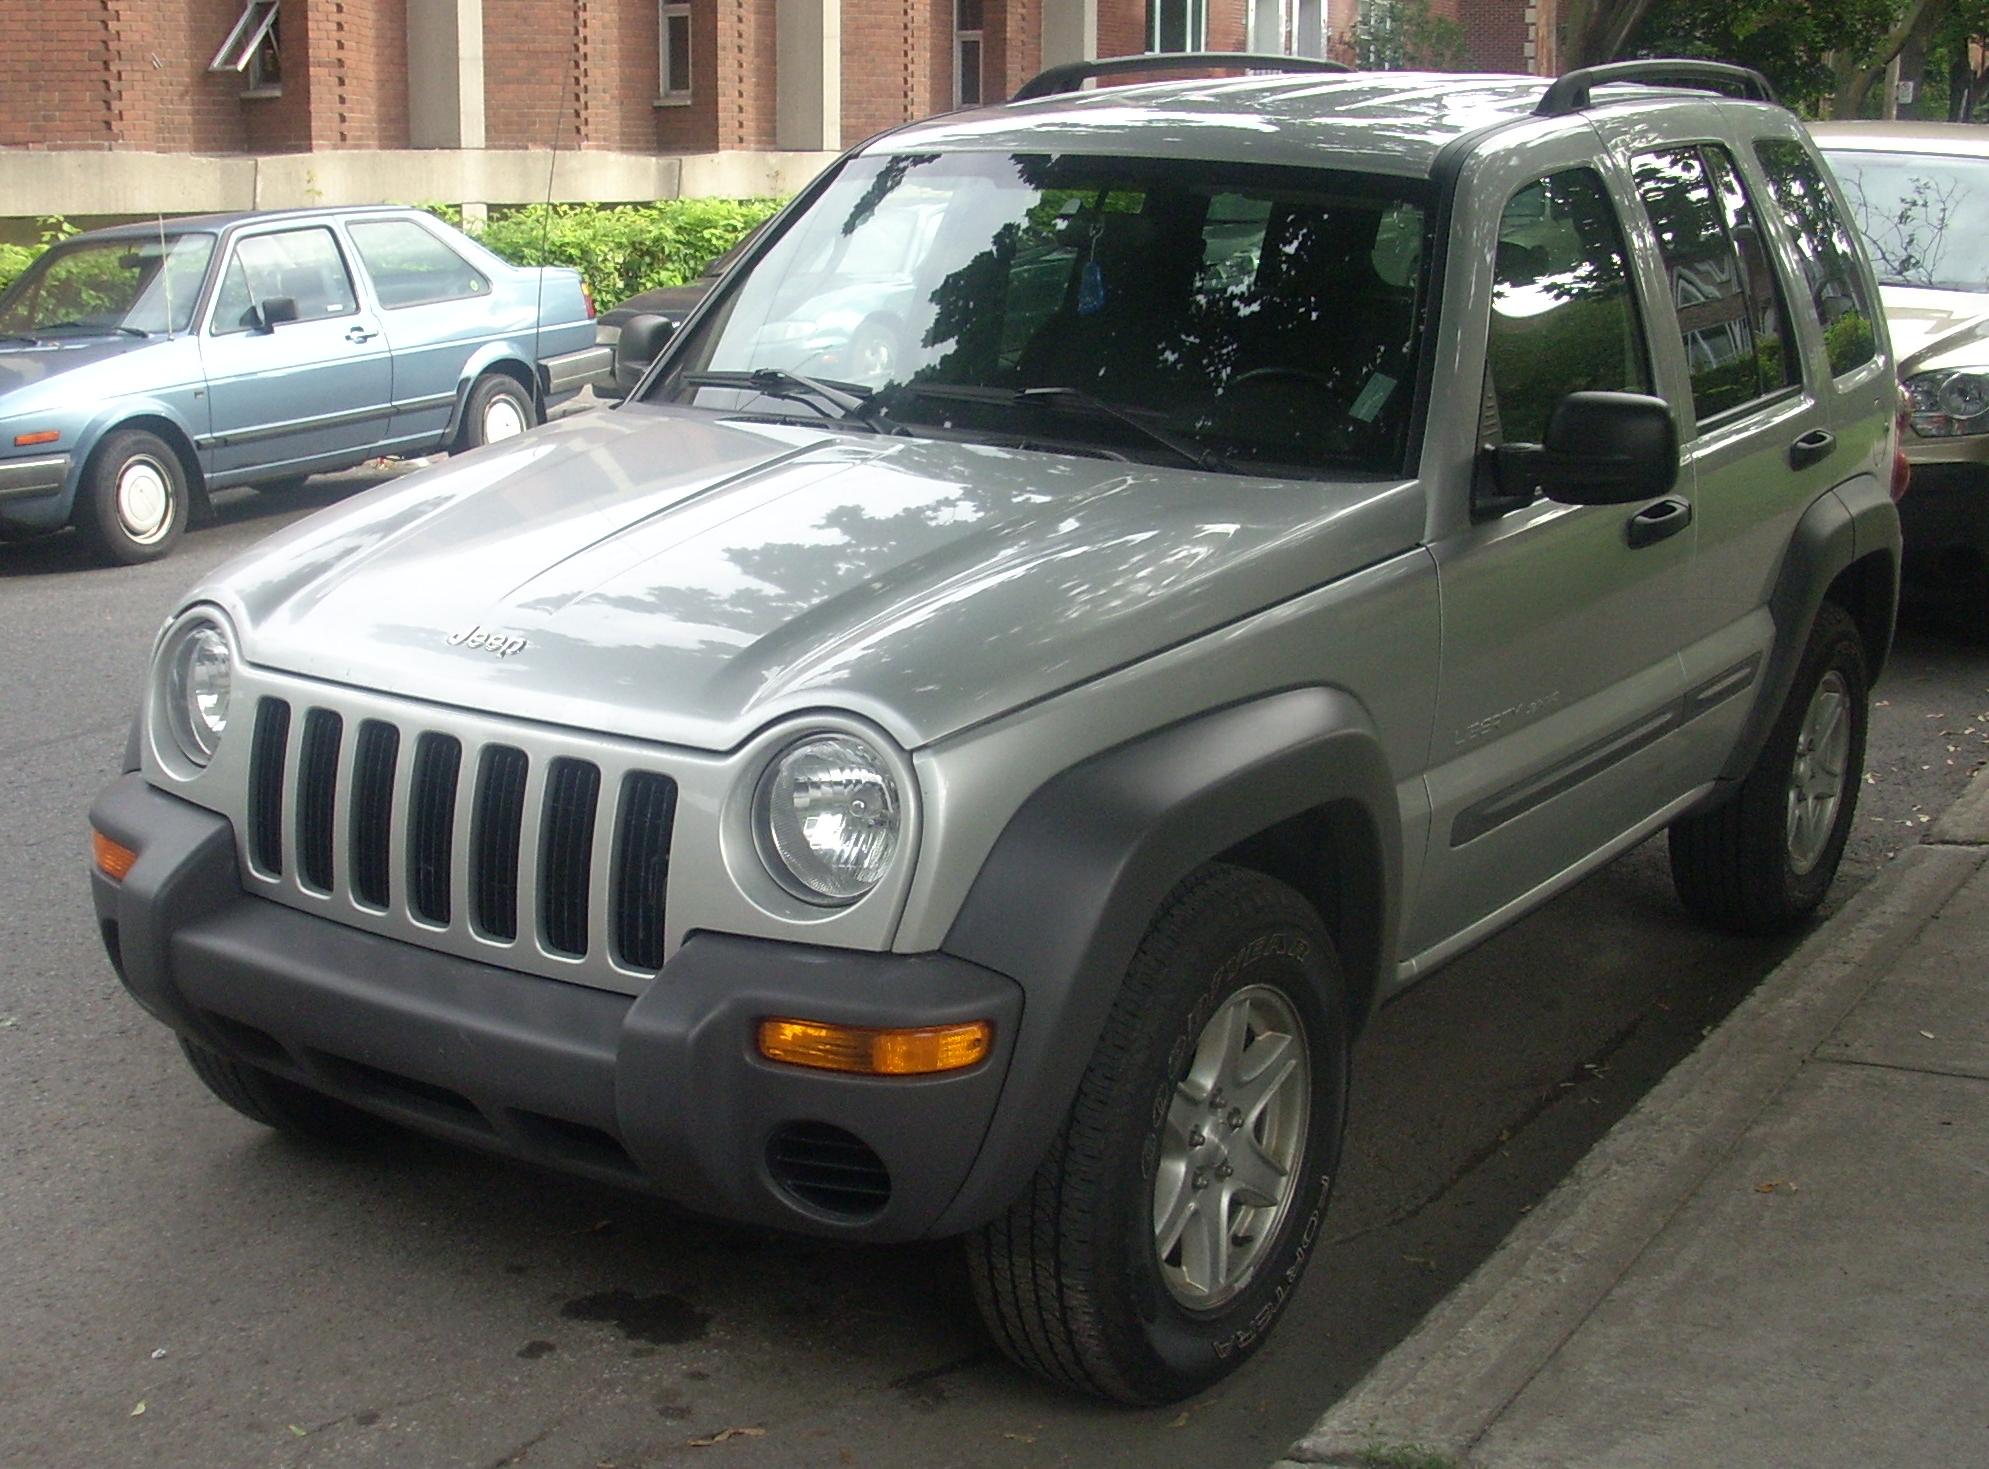 File:2002-2004 Jeep Liberty Sport.JPG - Wikimedia Commons